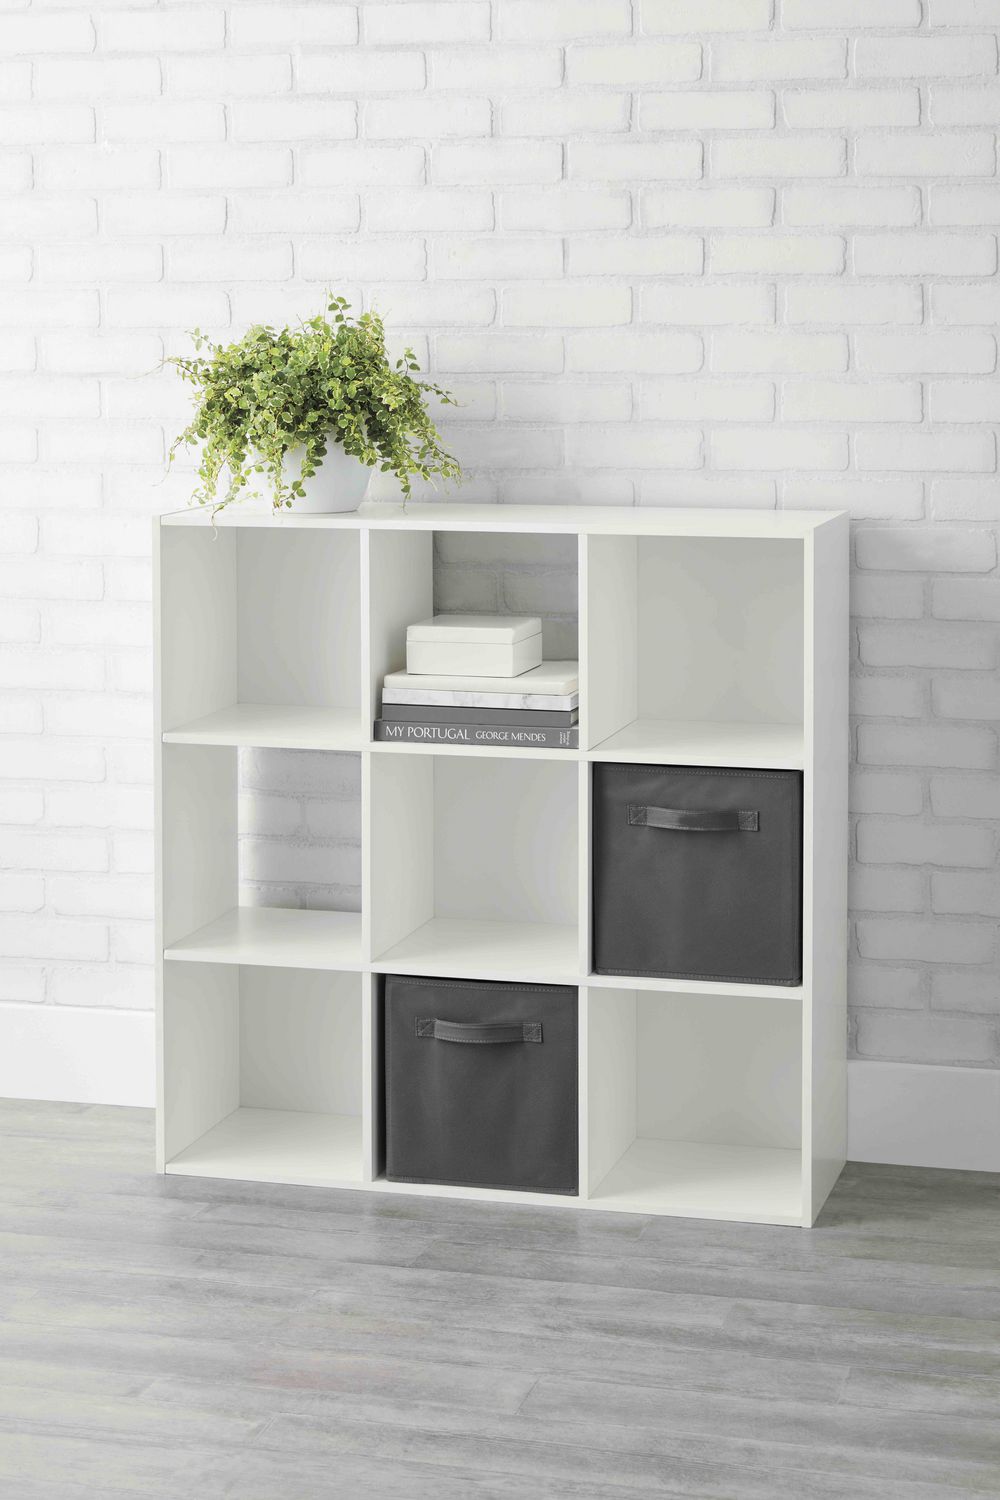 ZENSTYLE 9-Cube Storage Shelf Organizer Bookshelf System, Display